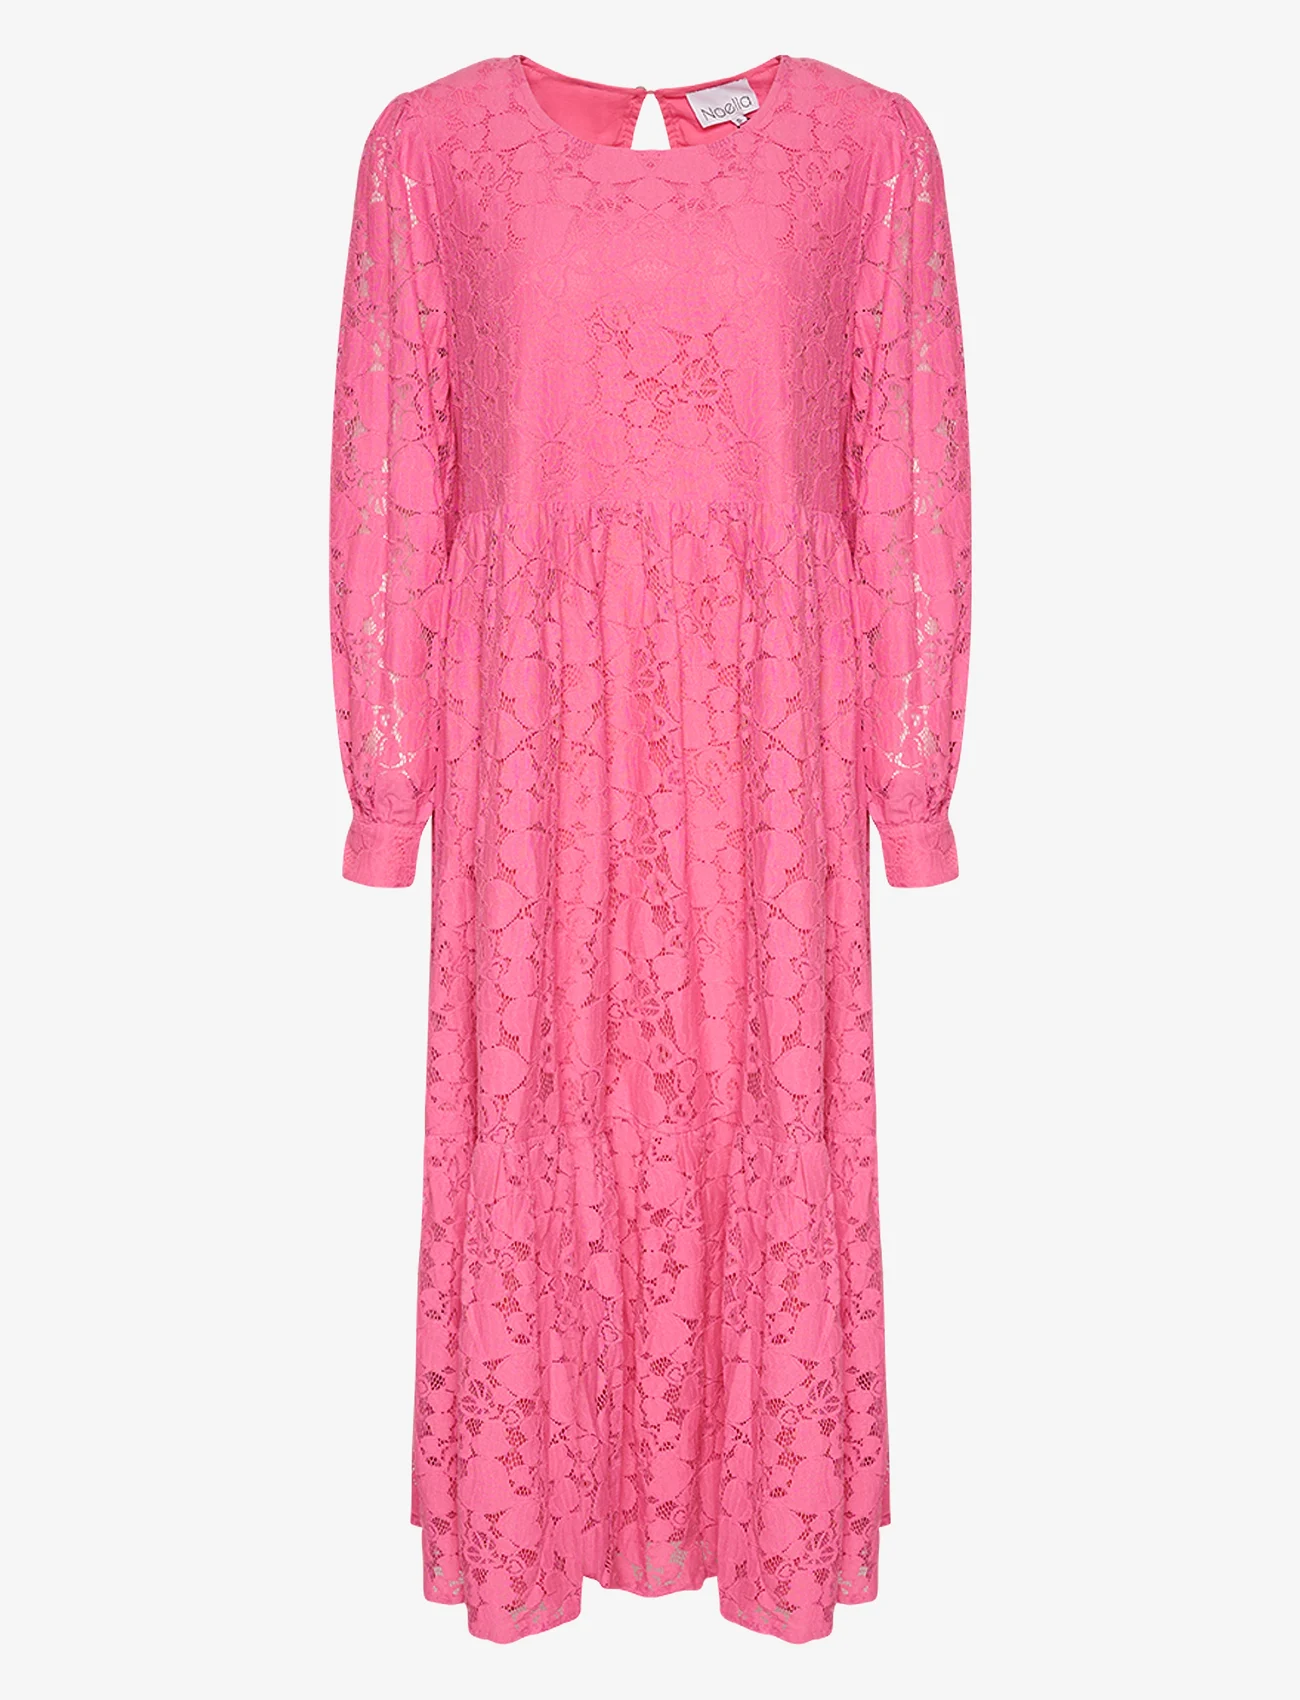 Noella - Macenna Long Dress - lace dresses - candy pink - 0